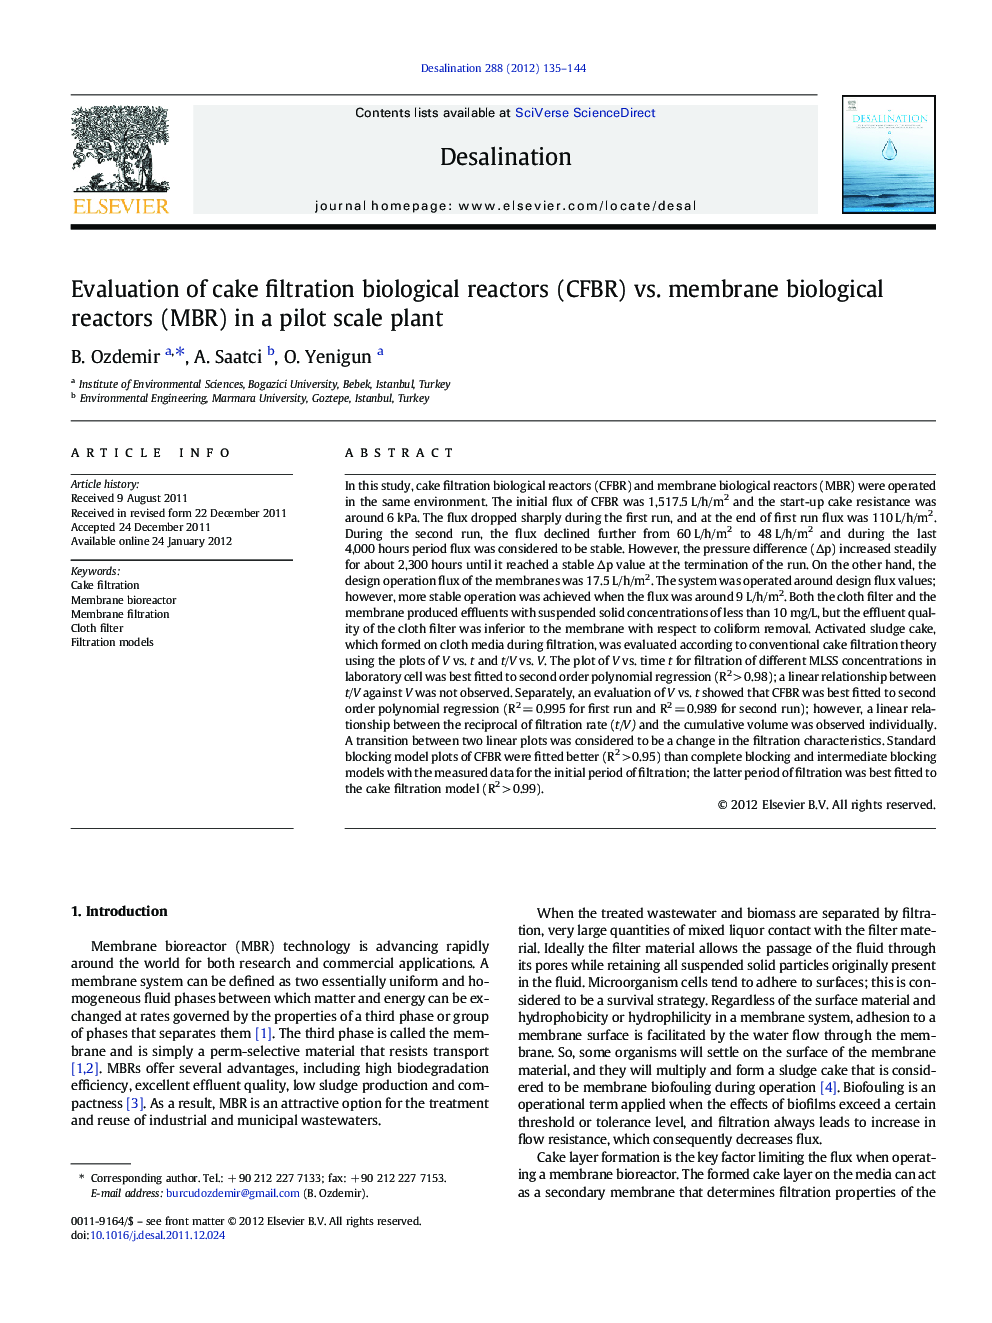 Evaluation of cake filtration biological reactors (CFBR) vs. membrane biological reactors (MBR) in a pilot scale plant